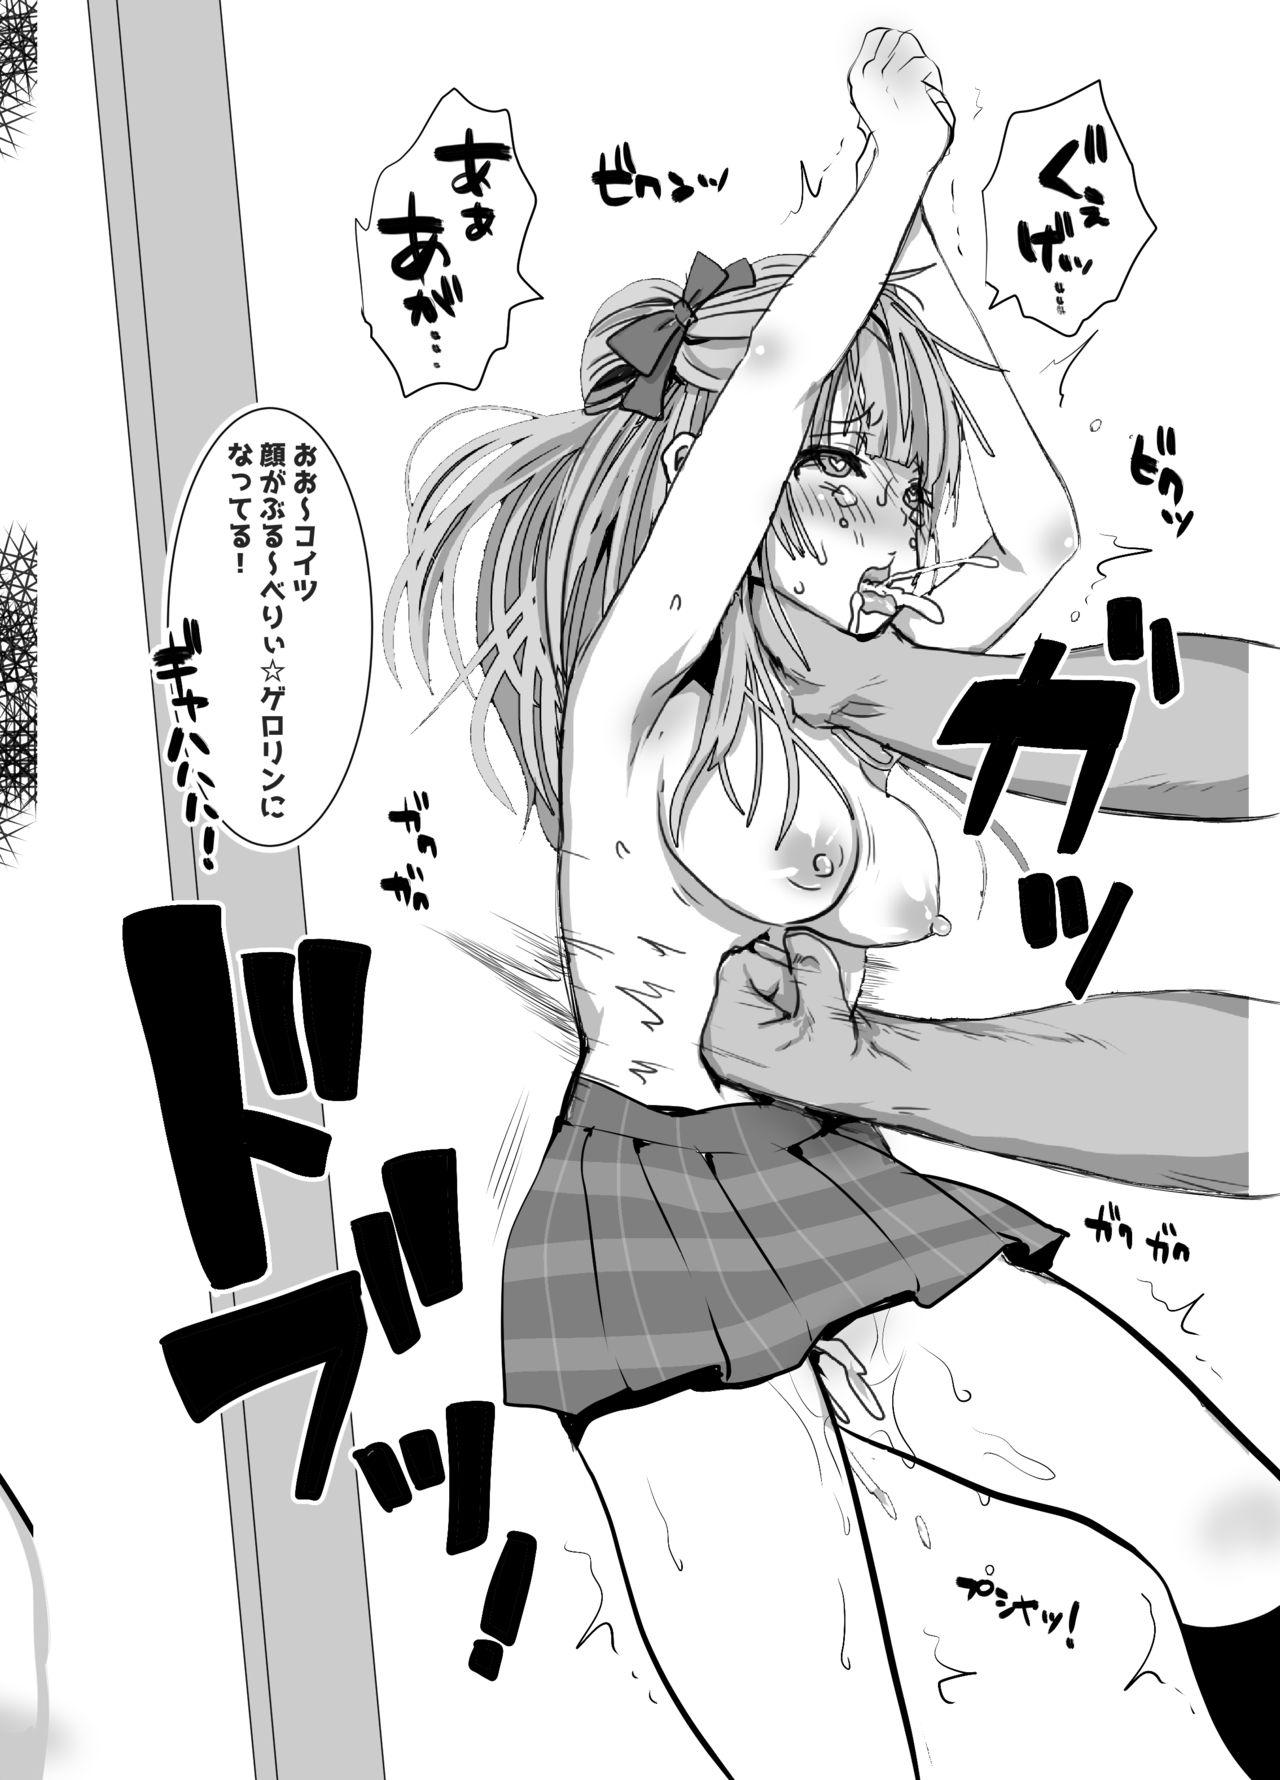 Kotori-chan's Wonderful Gut Punch Dizzy Headed Ecstasy Beating 4